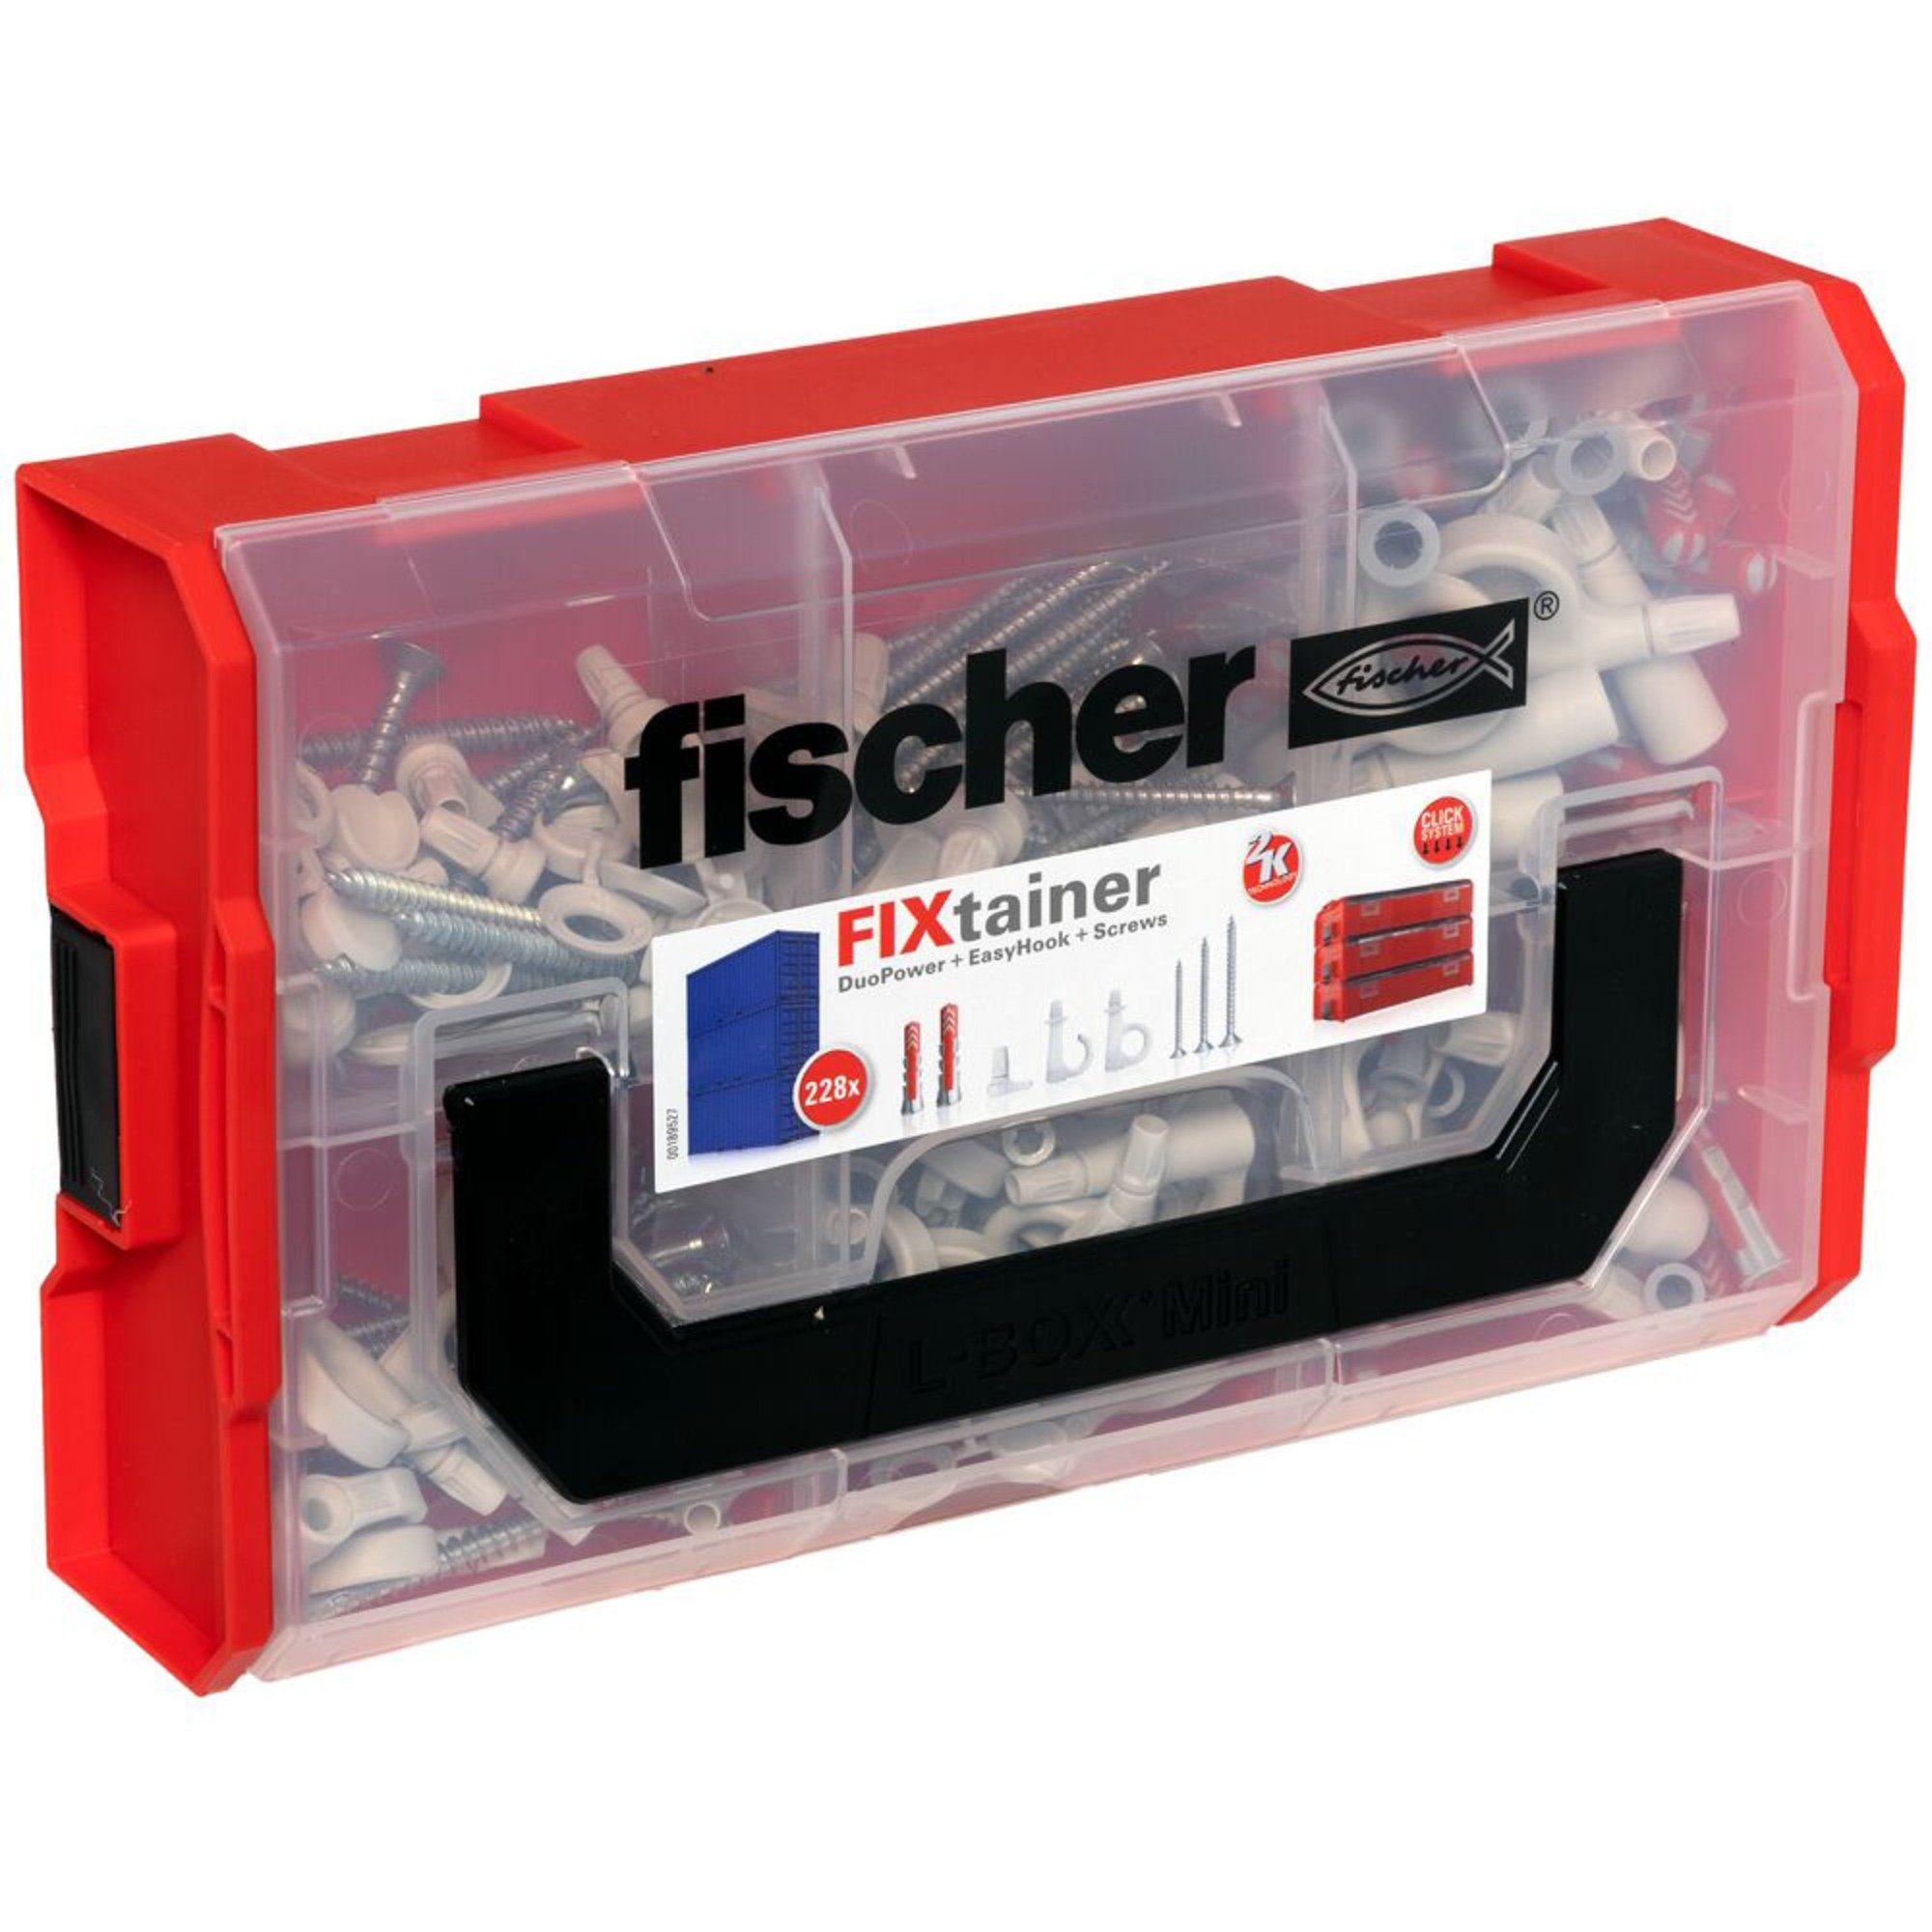 Garantie Fischer Universaldübel FixTainer Schraube DuoPower EasyHook fischer + 